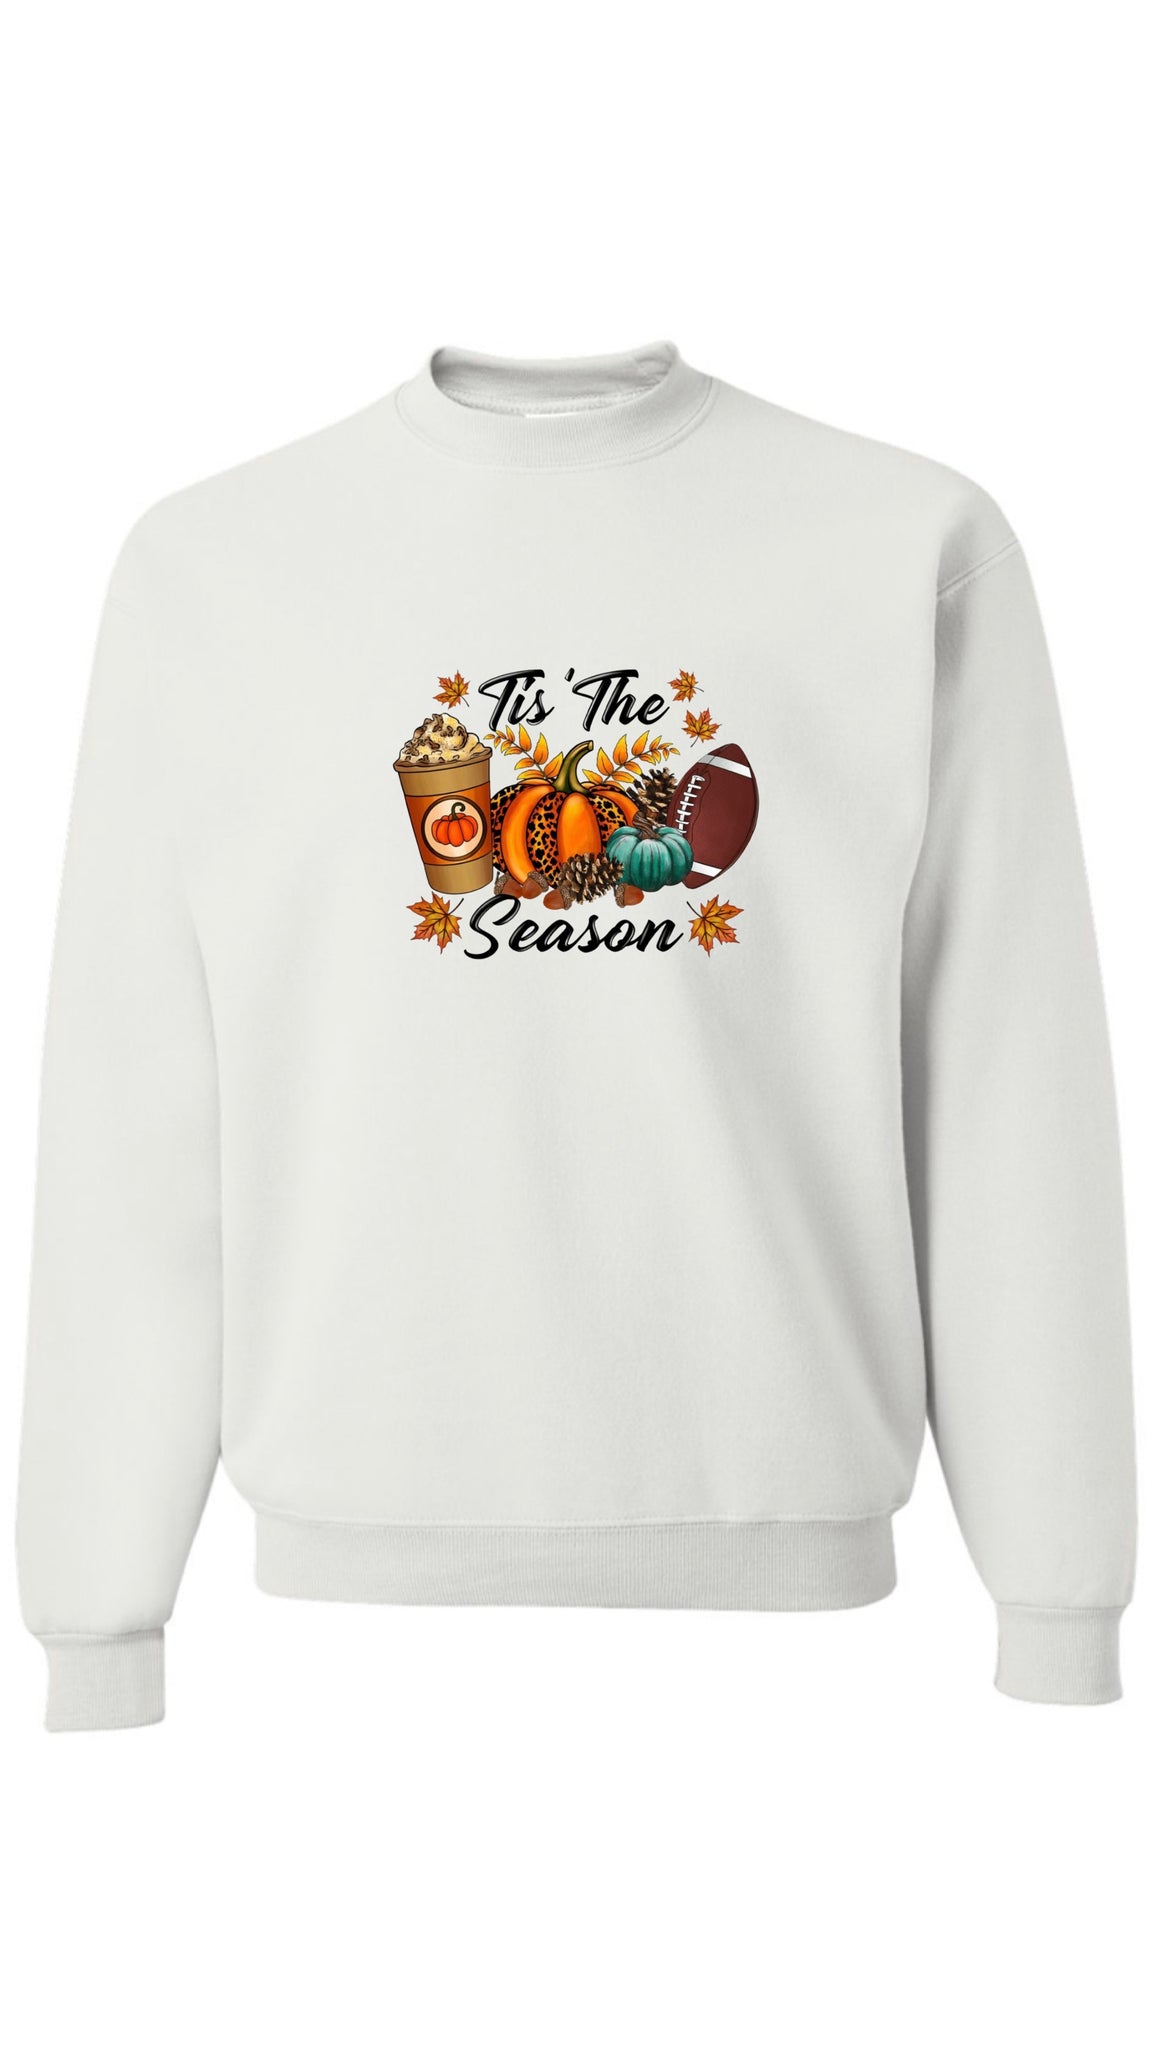 Tis’ the season pumpkin’s and football